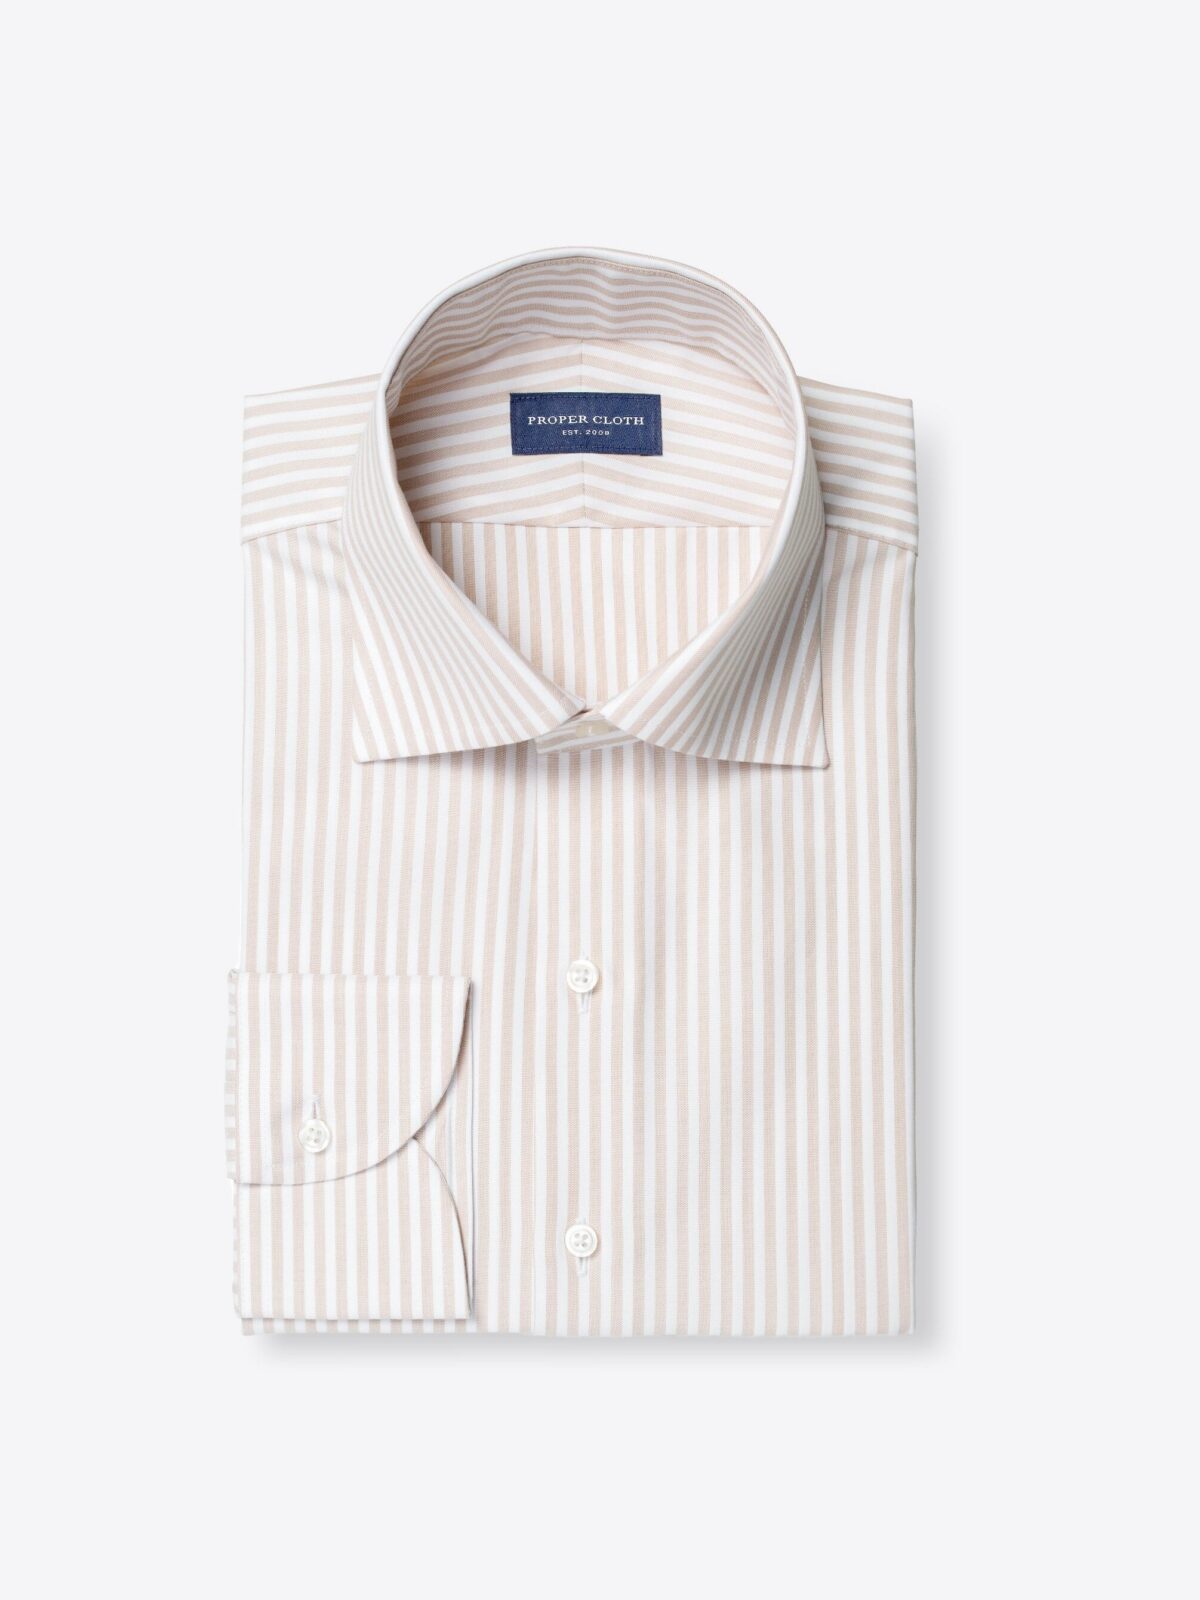 Thomas Mason WR Terra Cotta Stripe Shirt by Proper Cloth